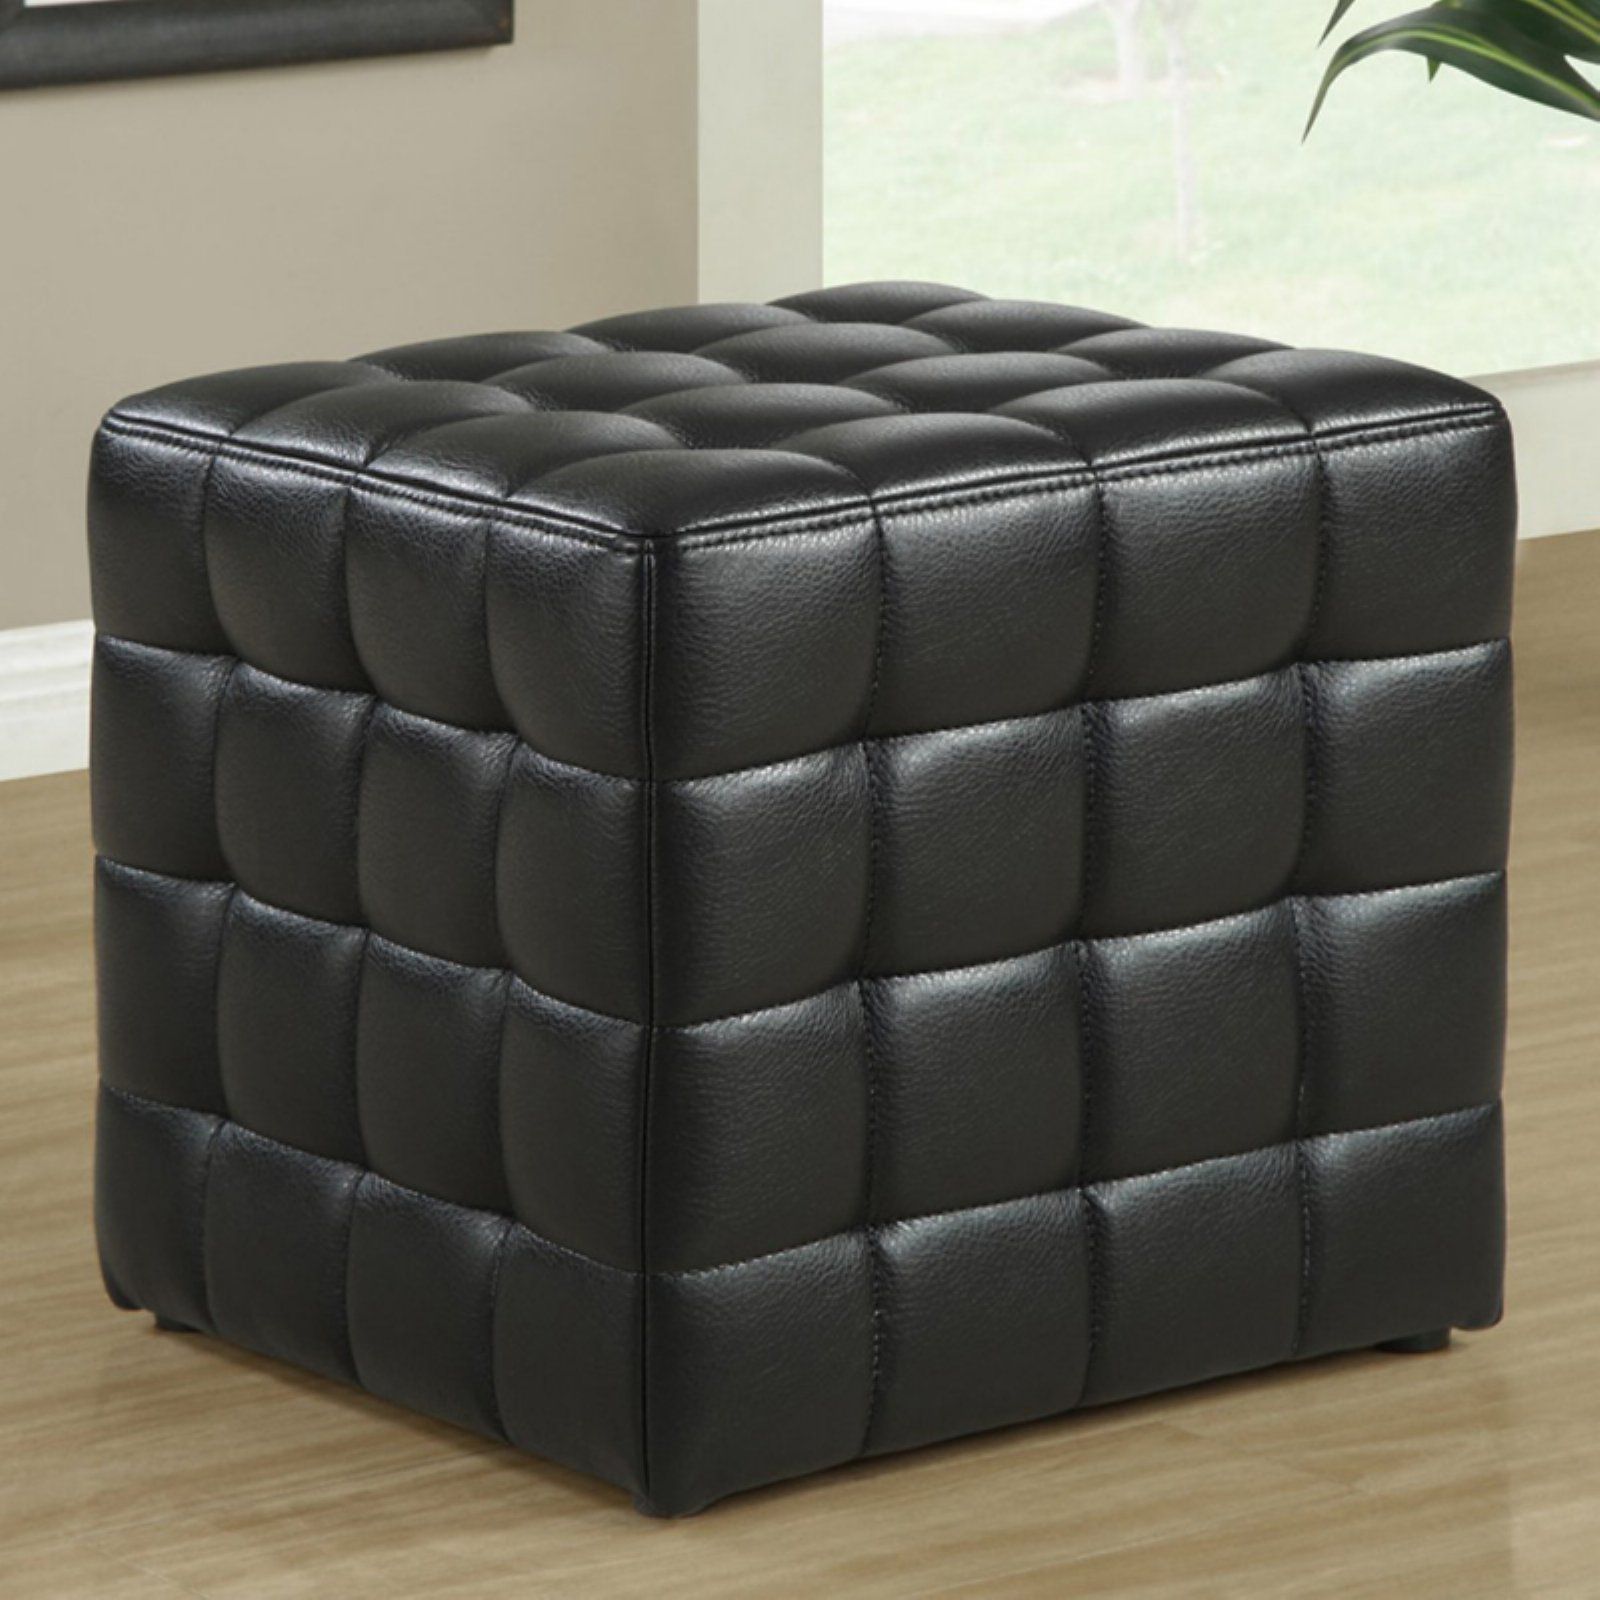 Benno Cube Ottoman | Faux Leather Ottoman, Black Ottoman, Furniture Within Black Faux Leather Cube Ottomans (View 11 of 20)